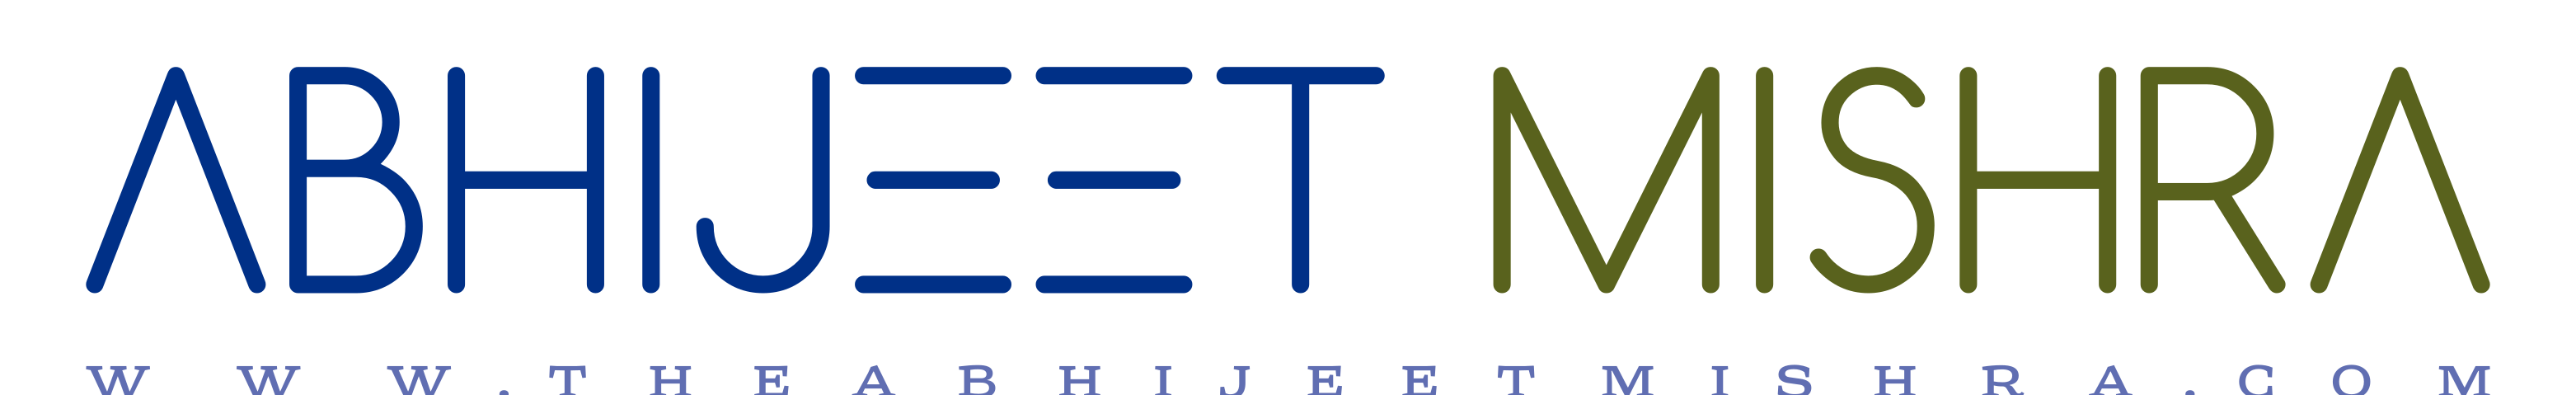 Real Editor Ajeet: Semifinalist logo done